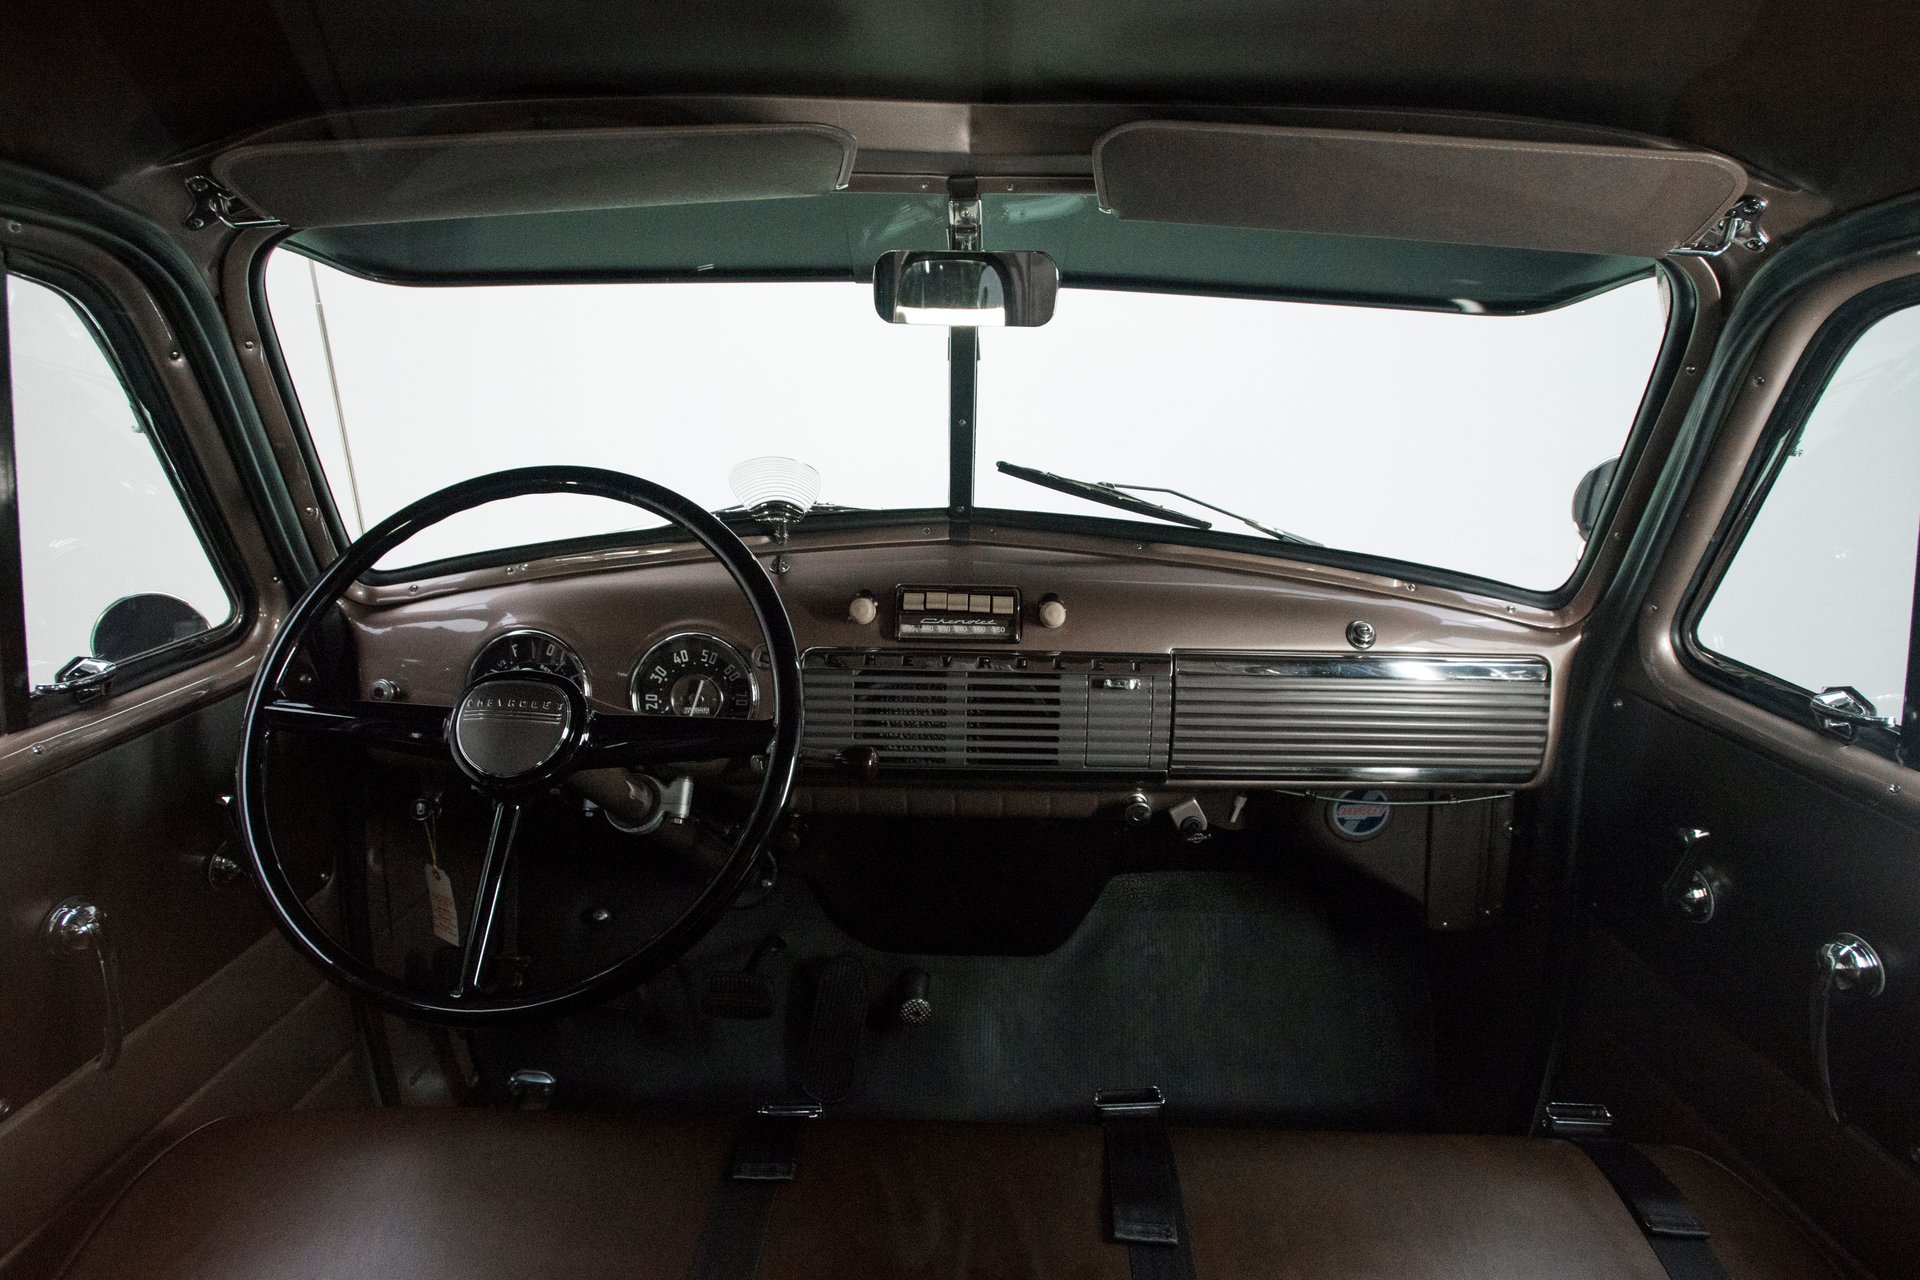 1953 chevrolet 3100 pickup truck